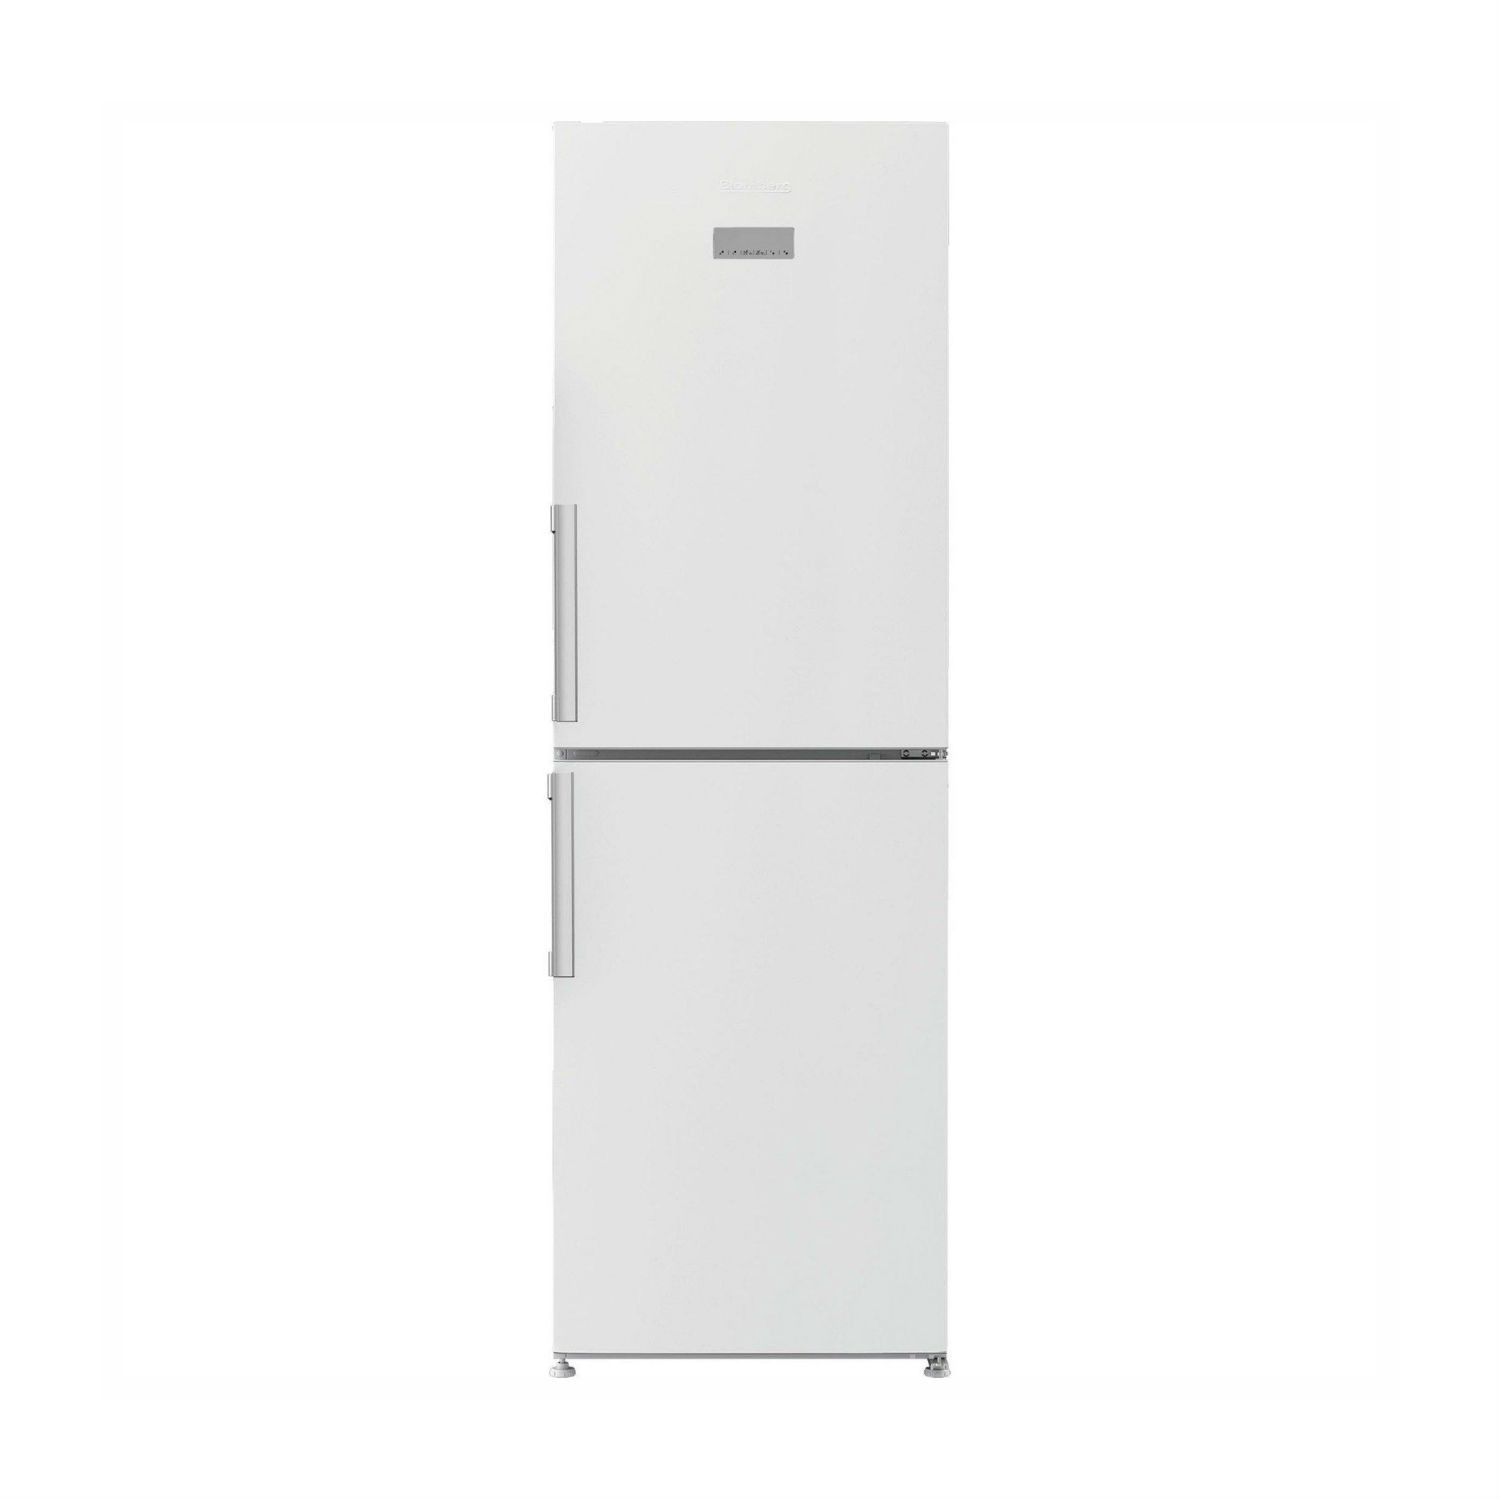 Blomberg 60cm Dual Cooling Fridge Freezer - White - A++ Energy Rated - 0